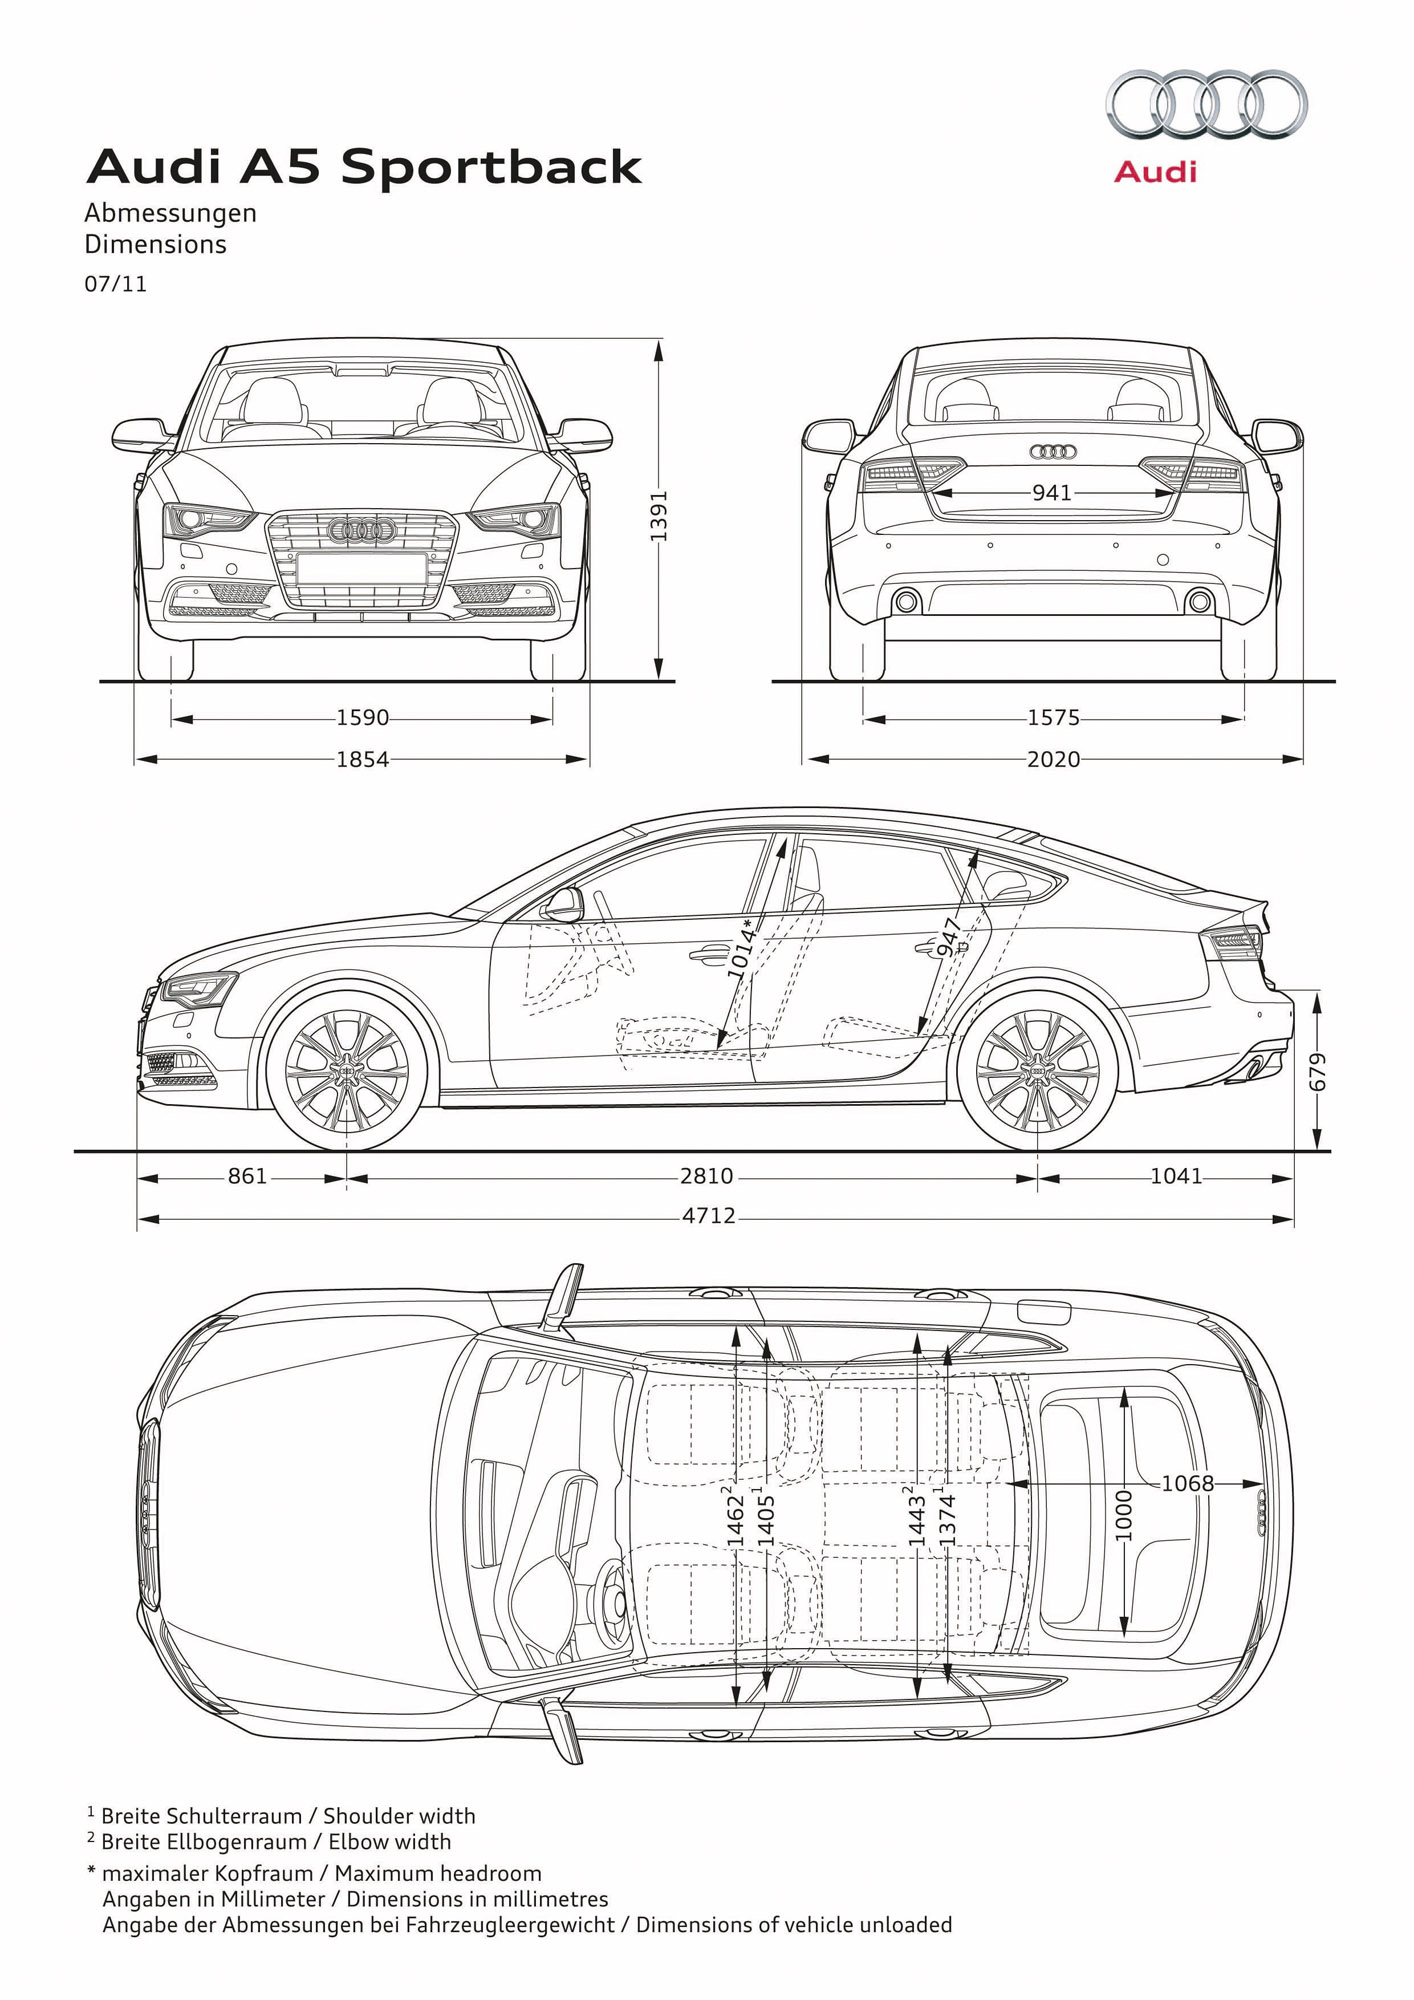 Audi Review on 2012 Audi A5 Sportback 18 Jpg